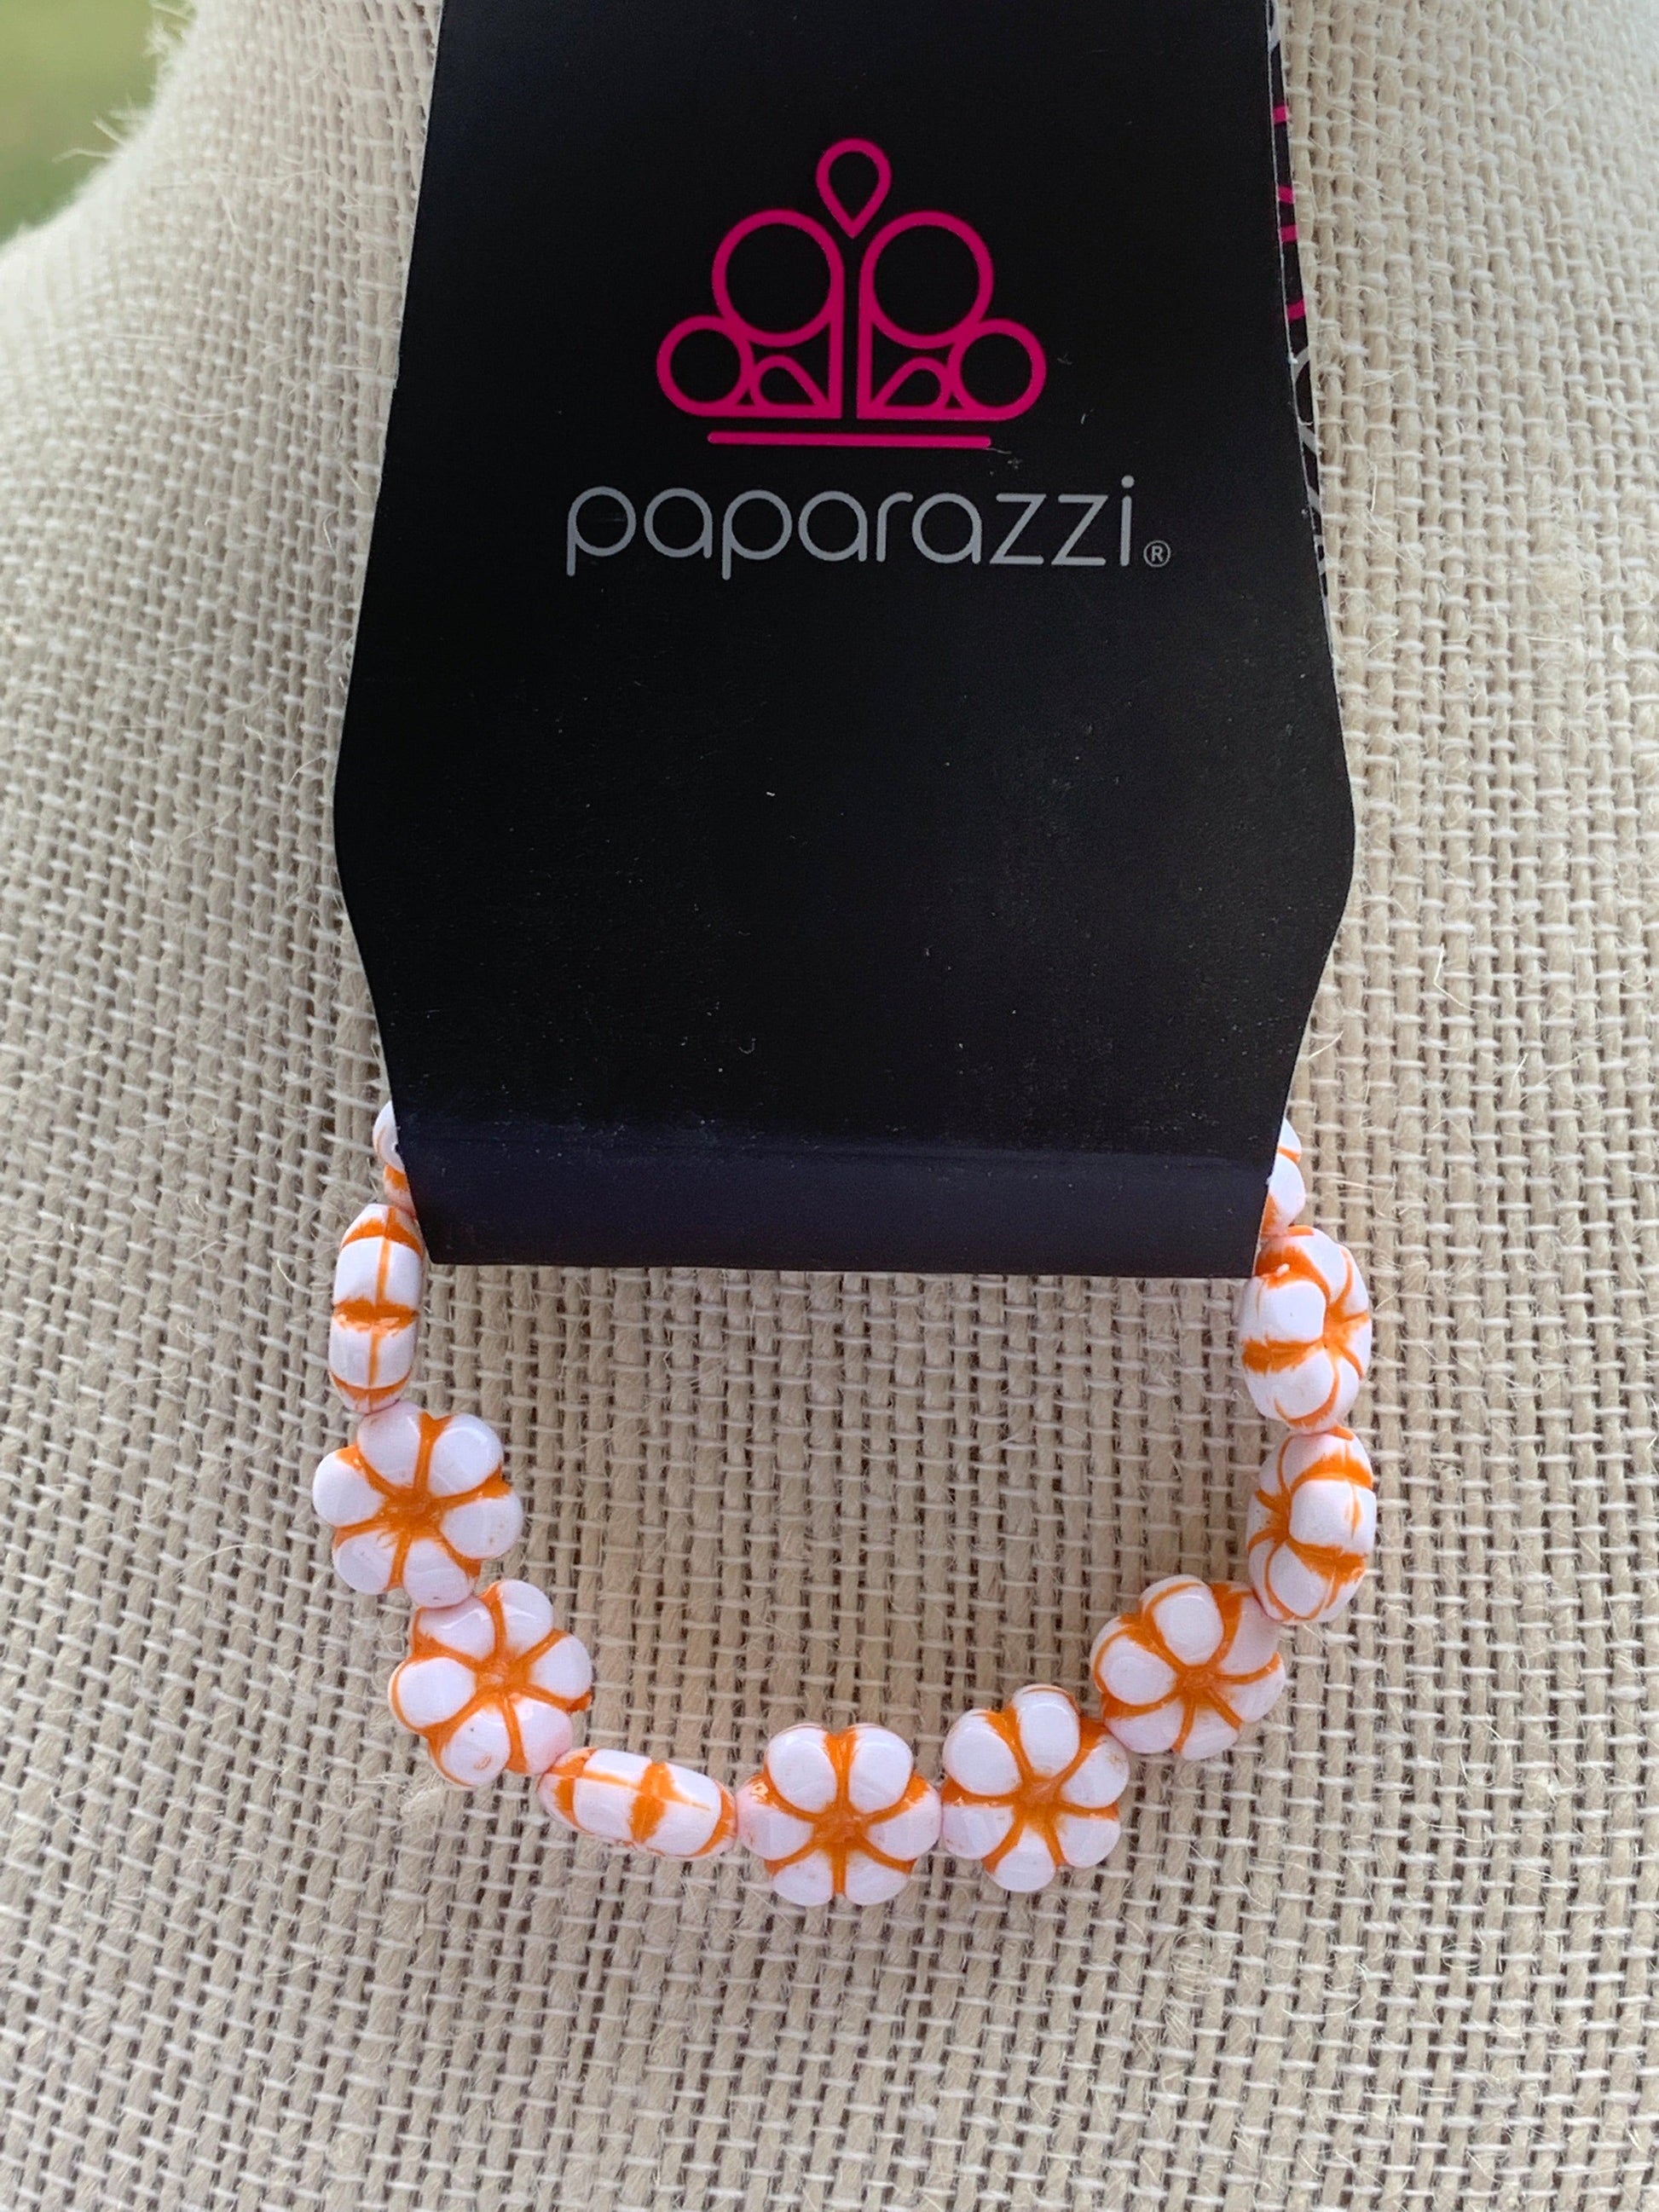 Paparazzi Accessories Starlet Shimmer Bracelet: #8 ~Orange Orange Bracelet ONLY